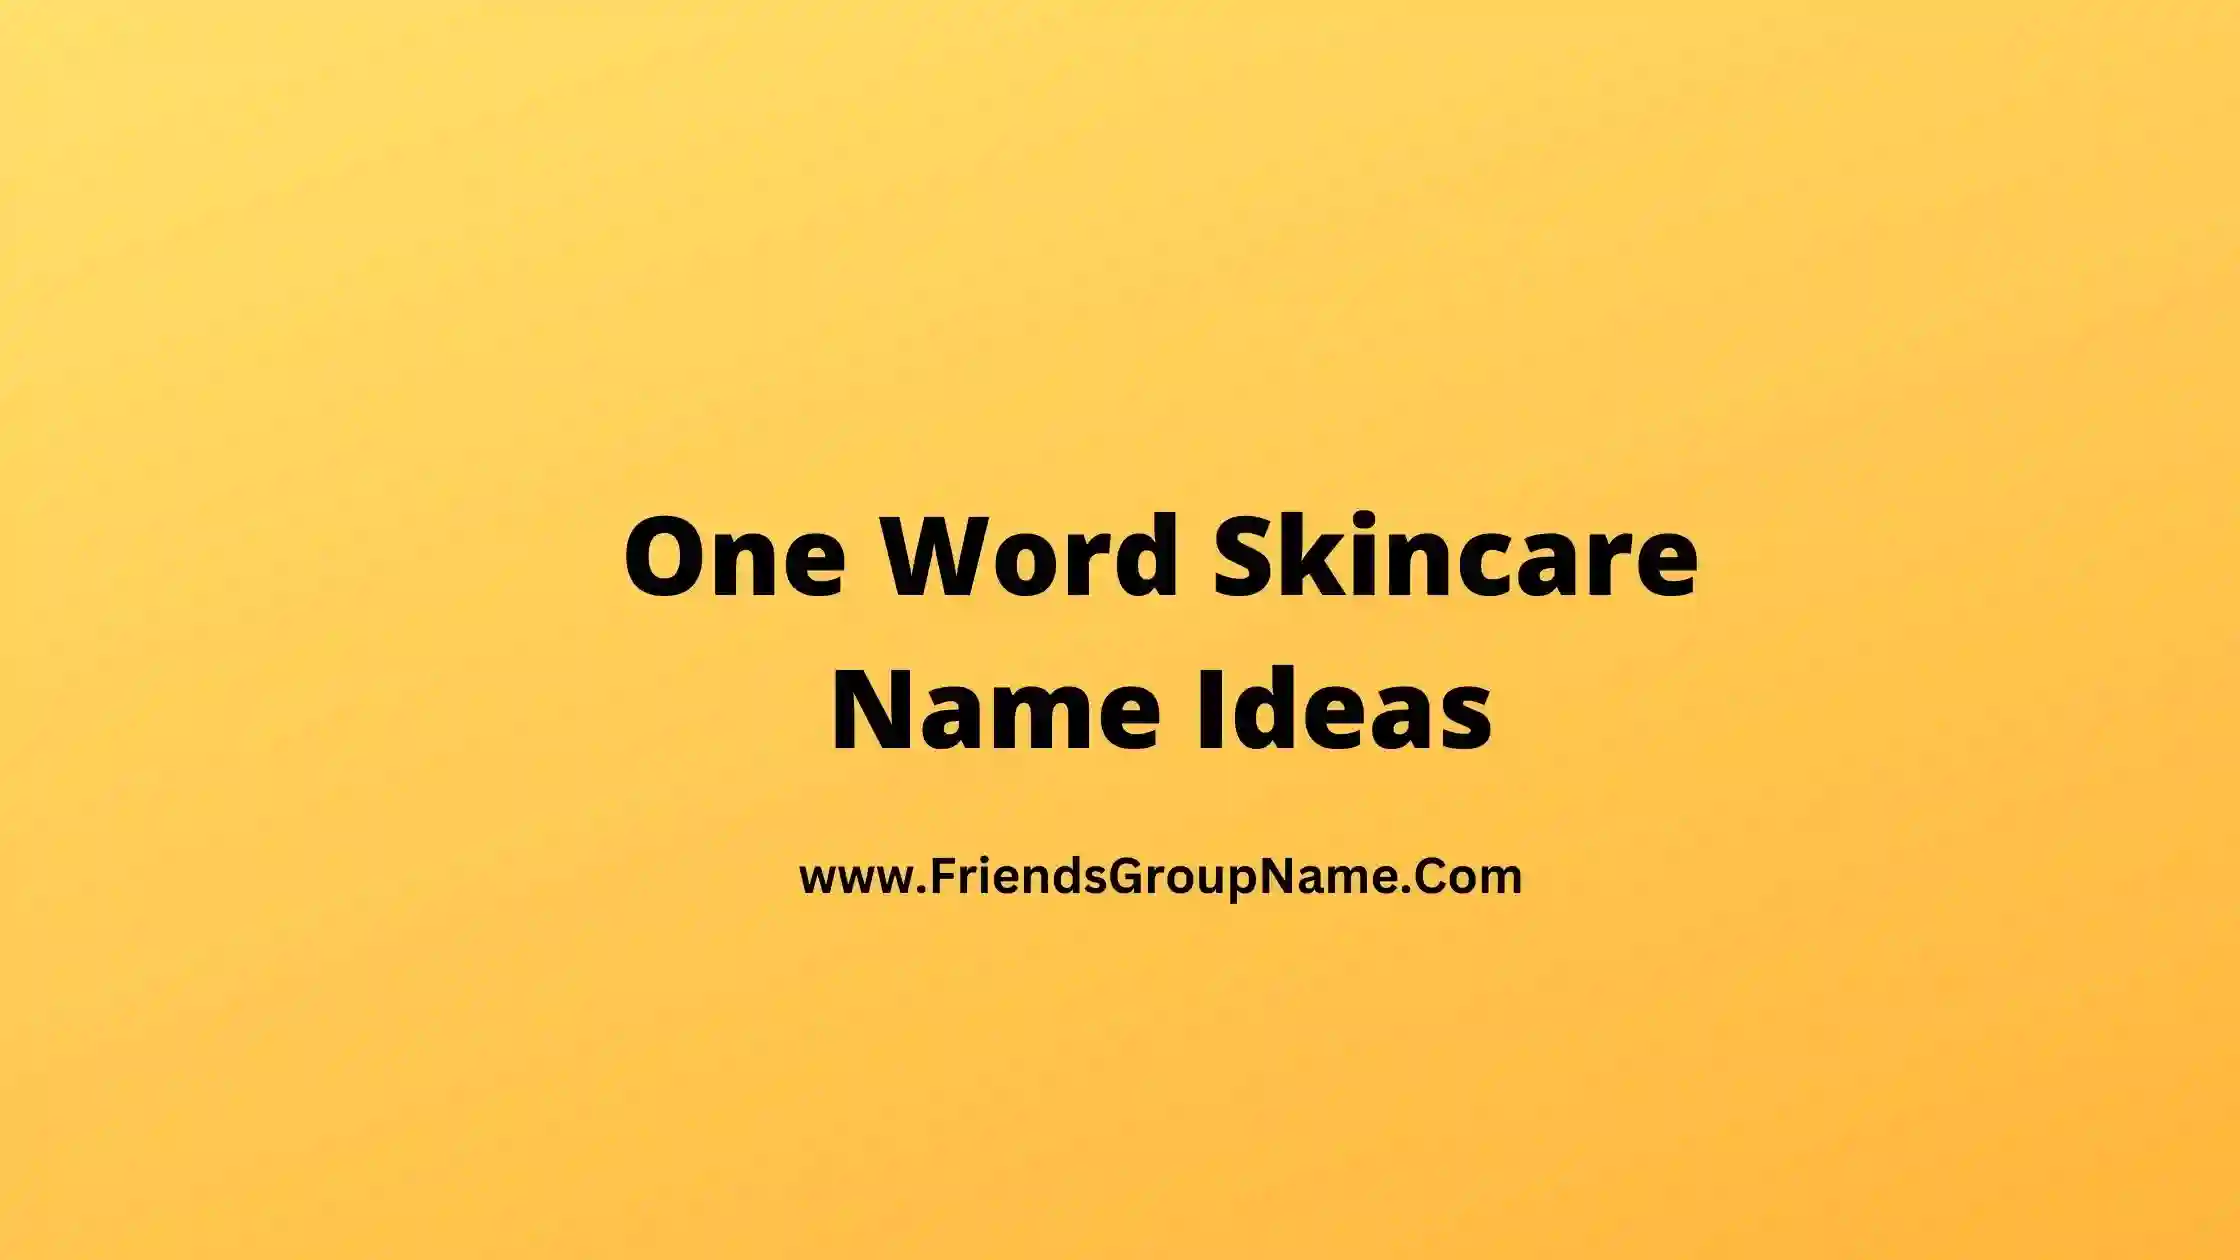 One Word Skincare Name Ideas